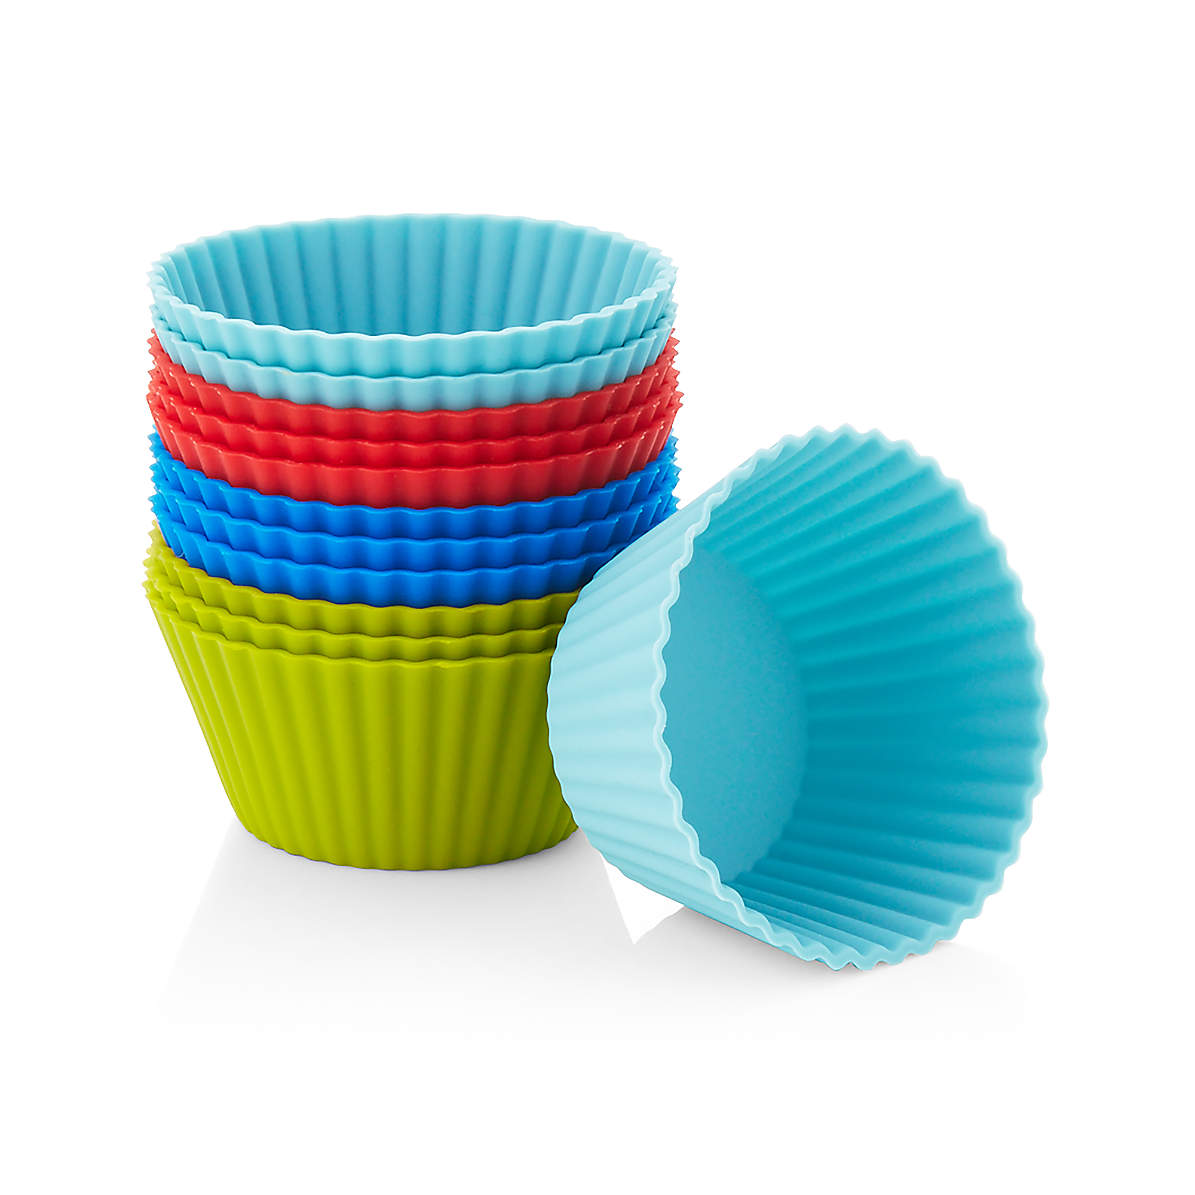 Net Zero Co. Silicone Baking Cups 12pk